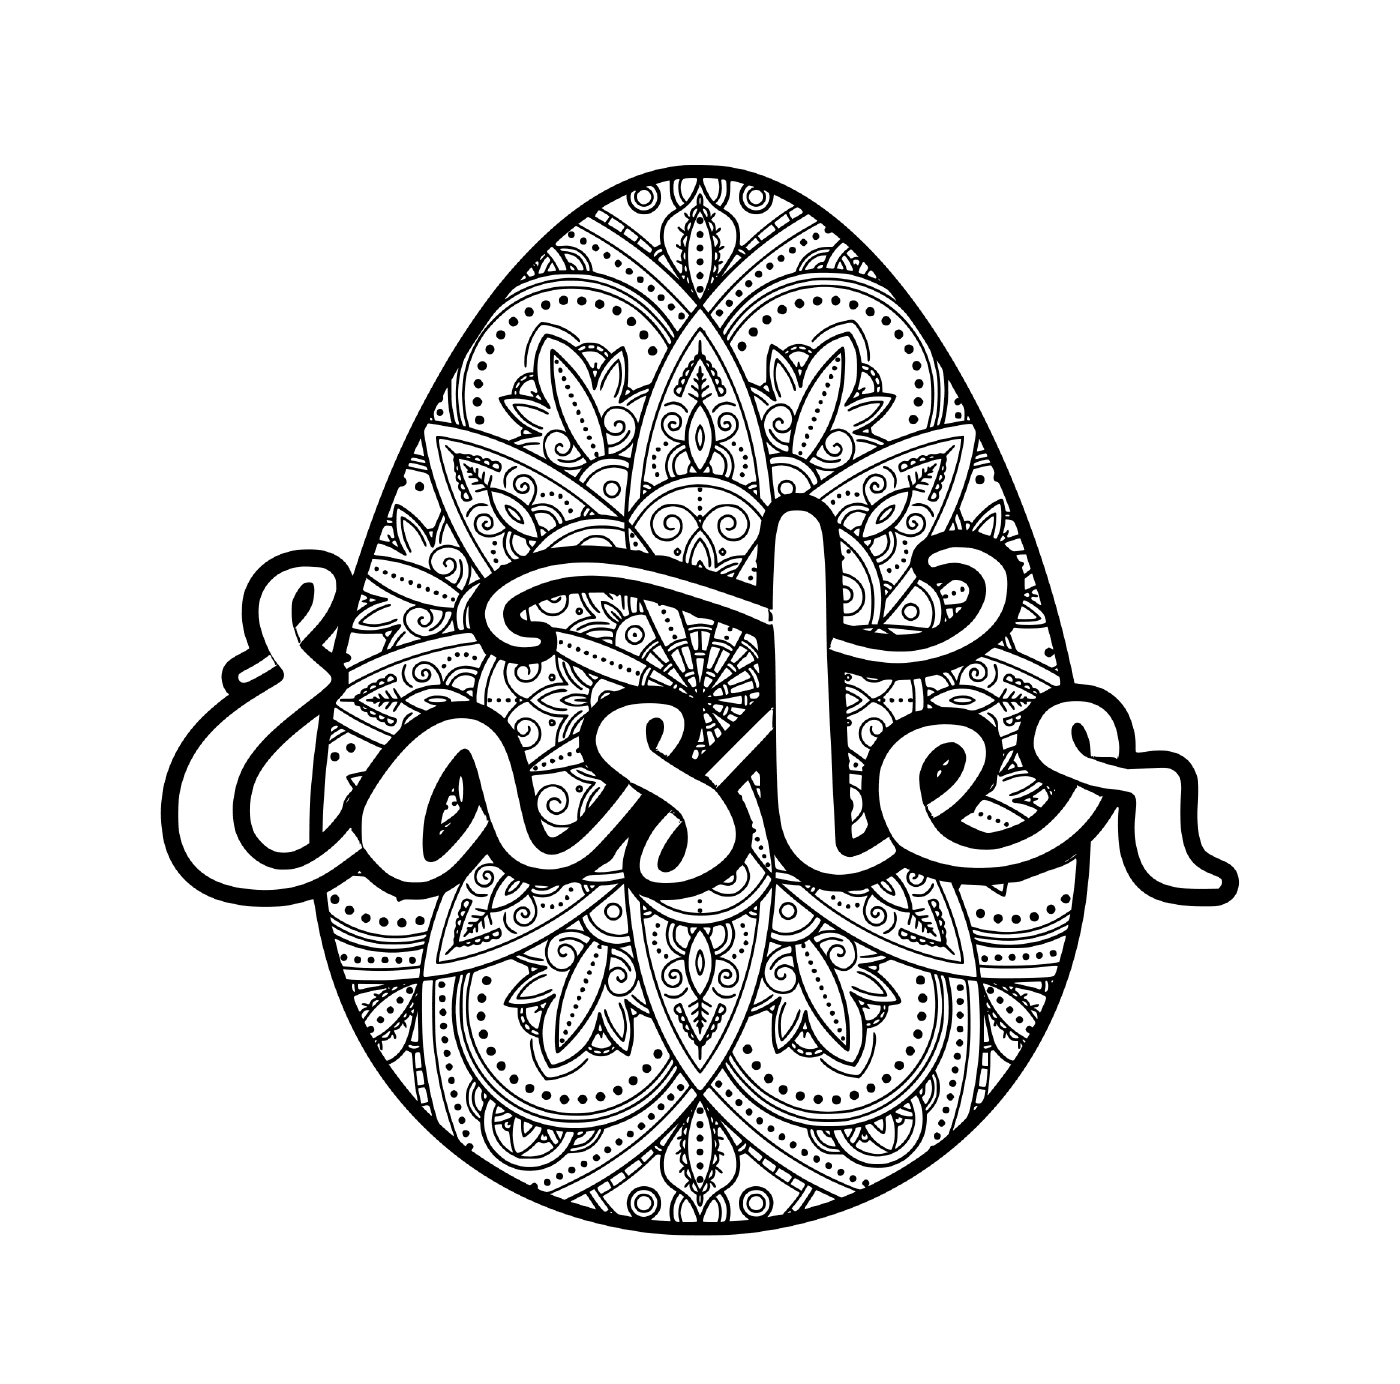   Easter egg design complexe 